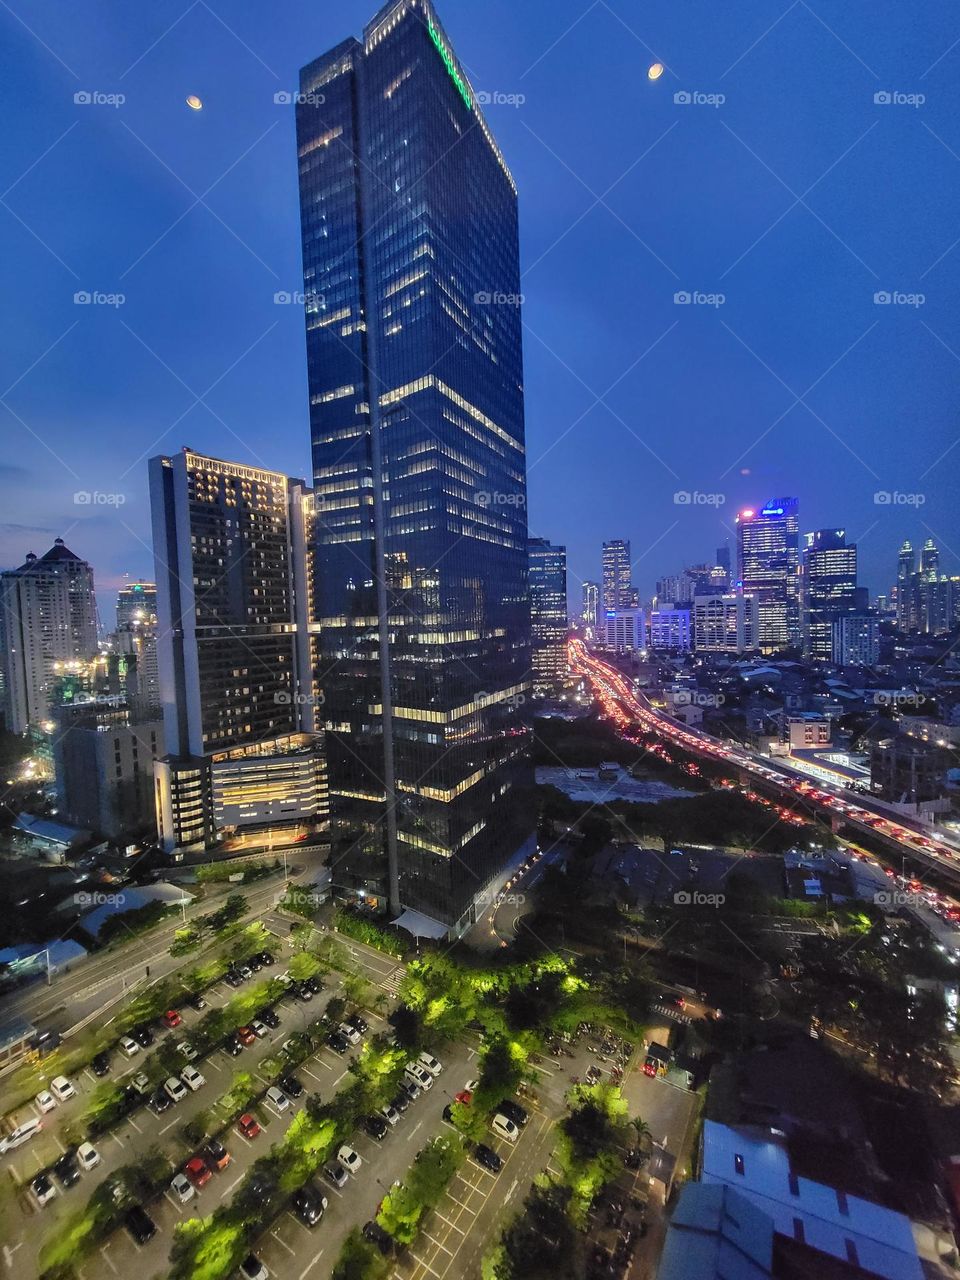 Jakarta Indonesia skyscrapers